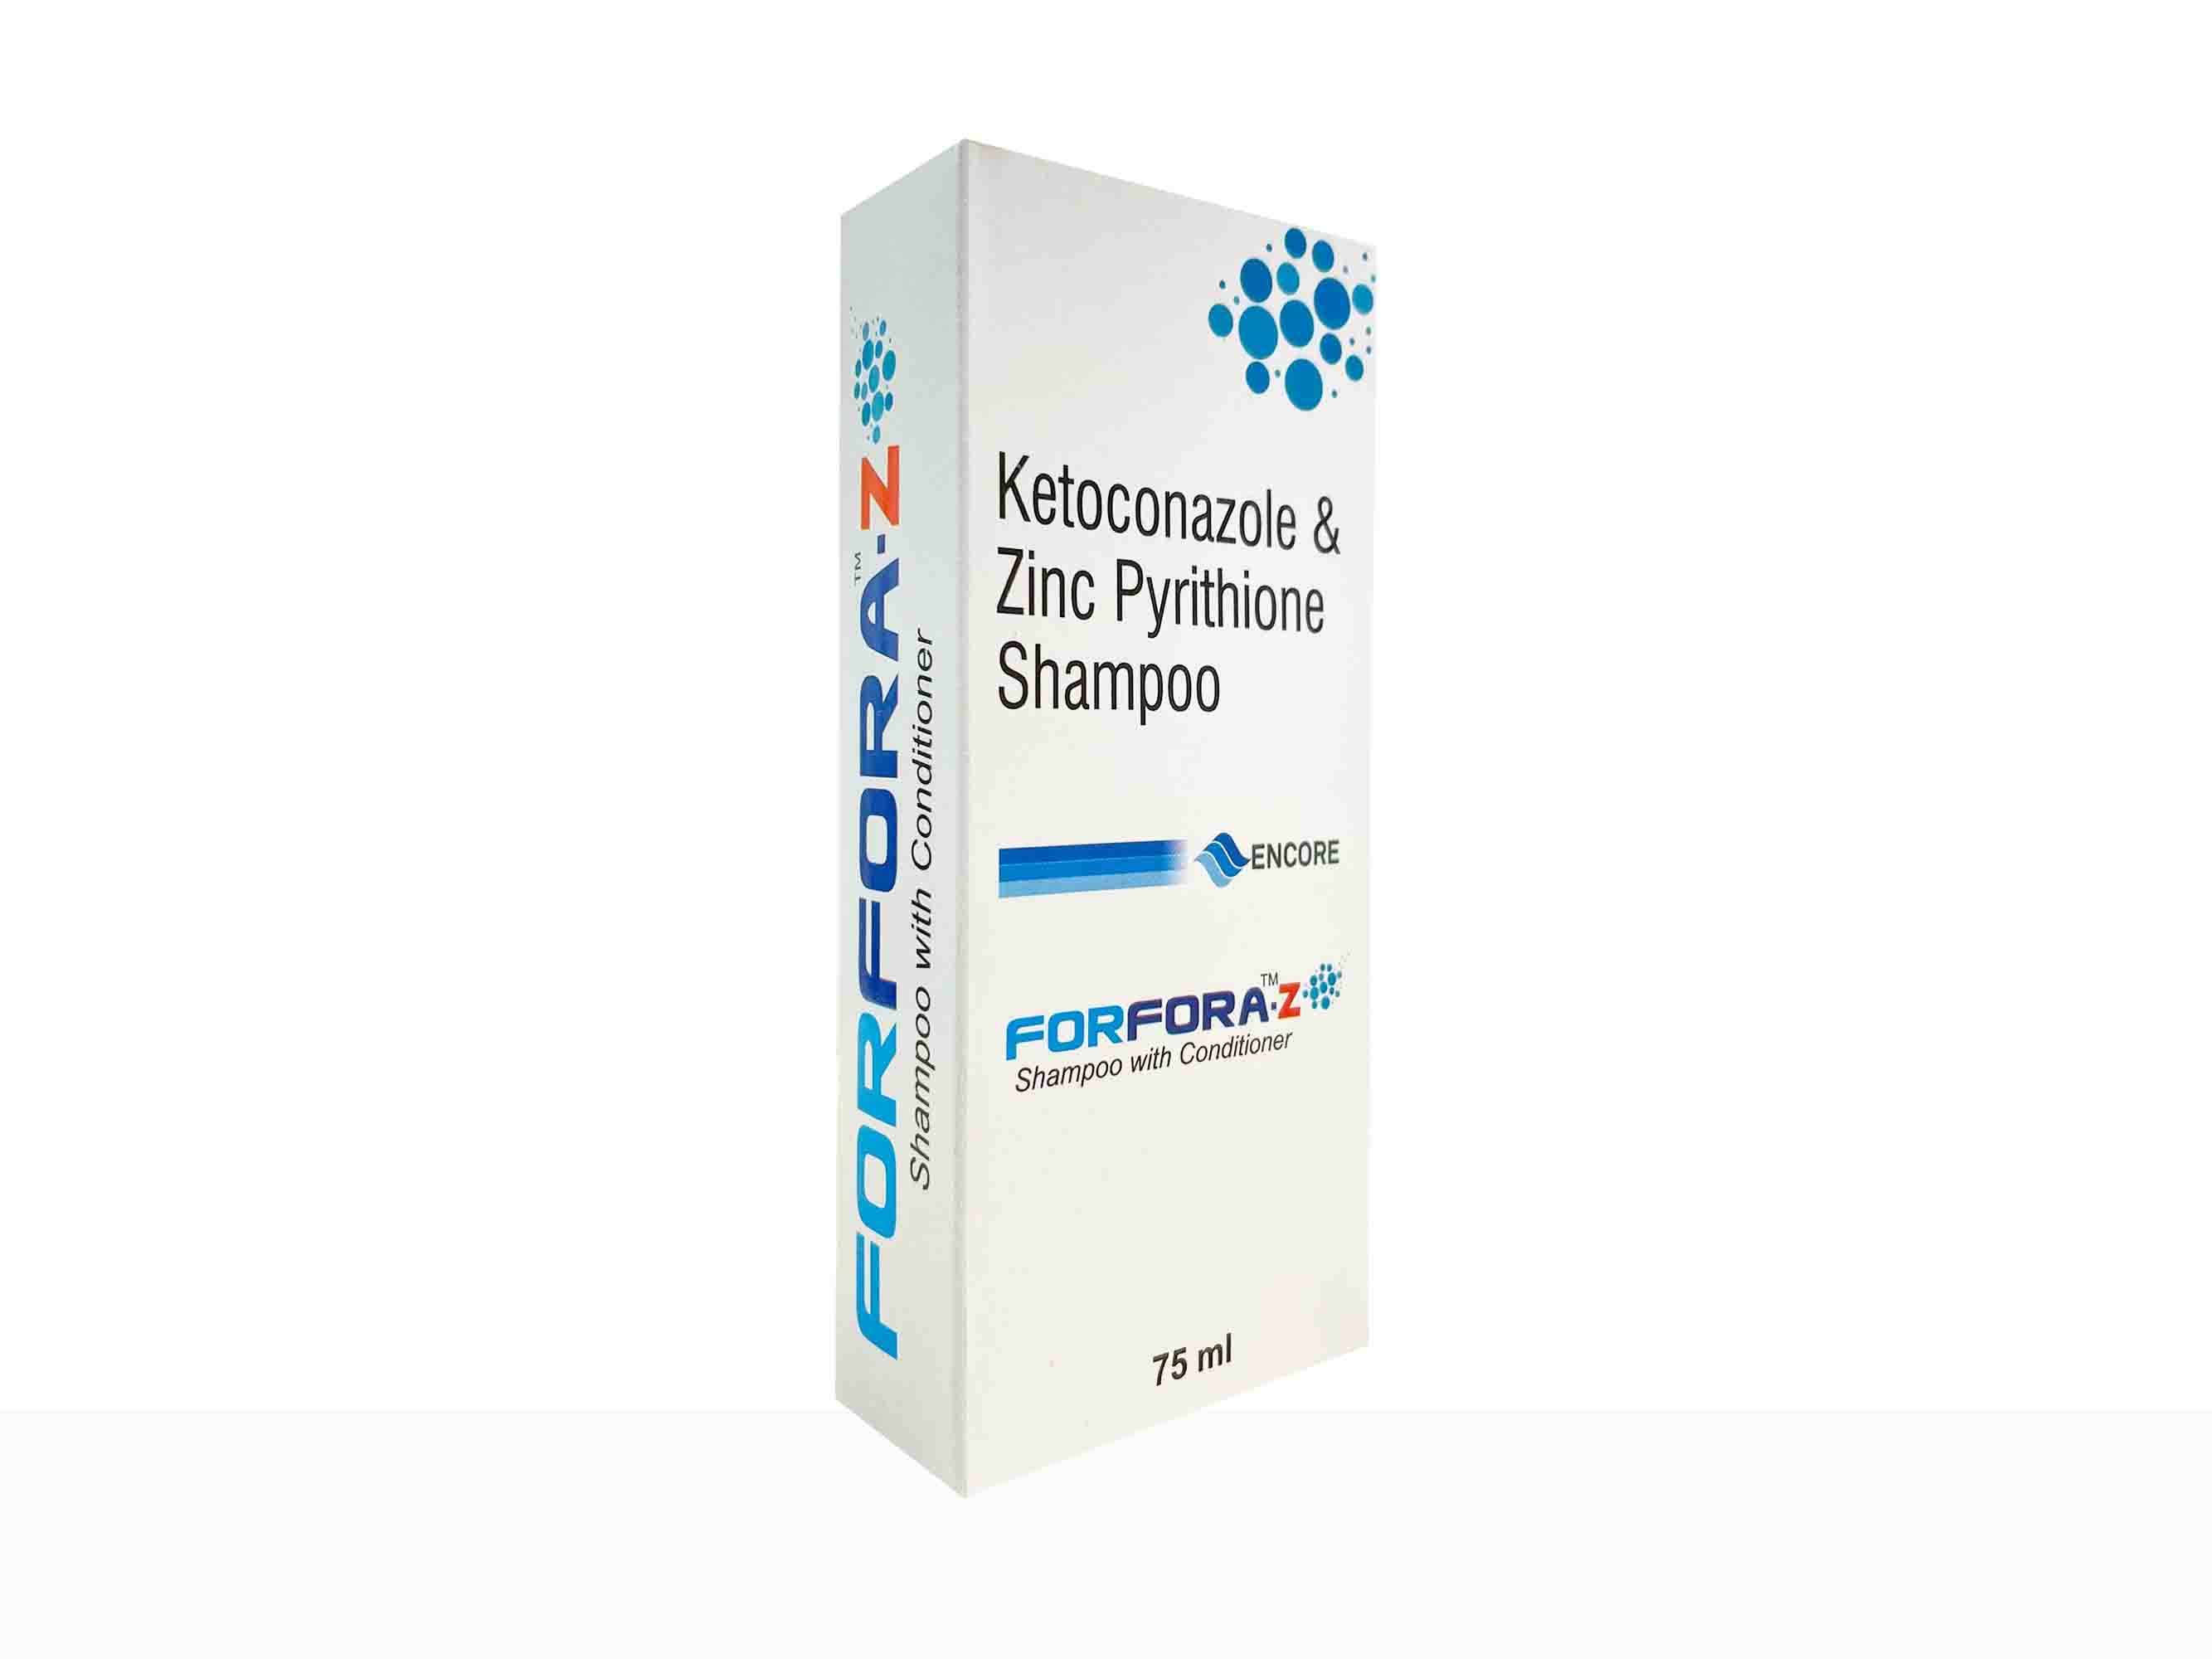 Forfora-Z Shampoo With Conditioner